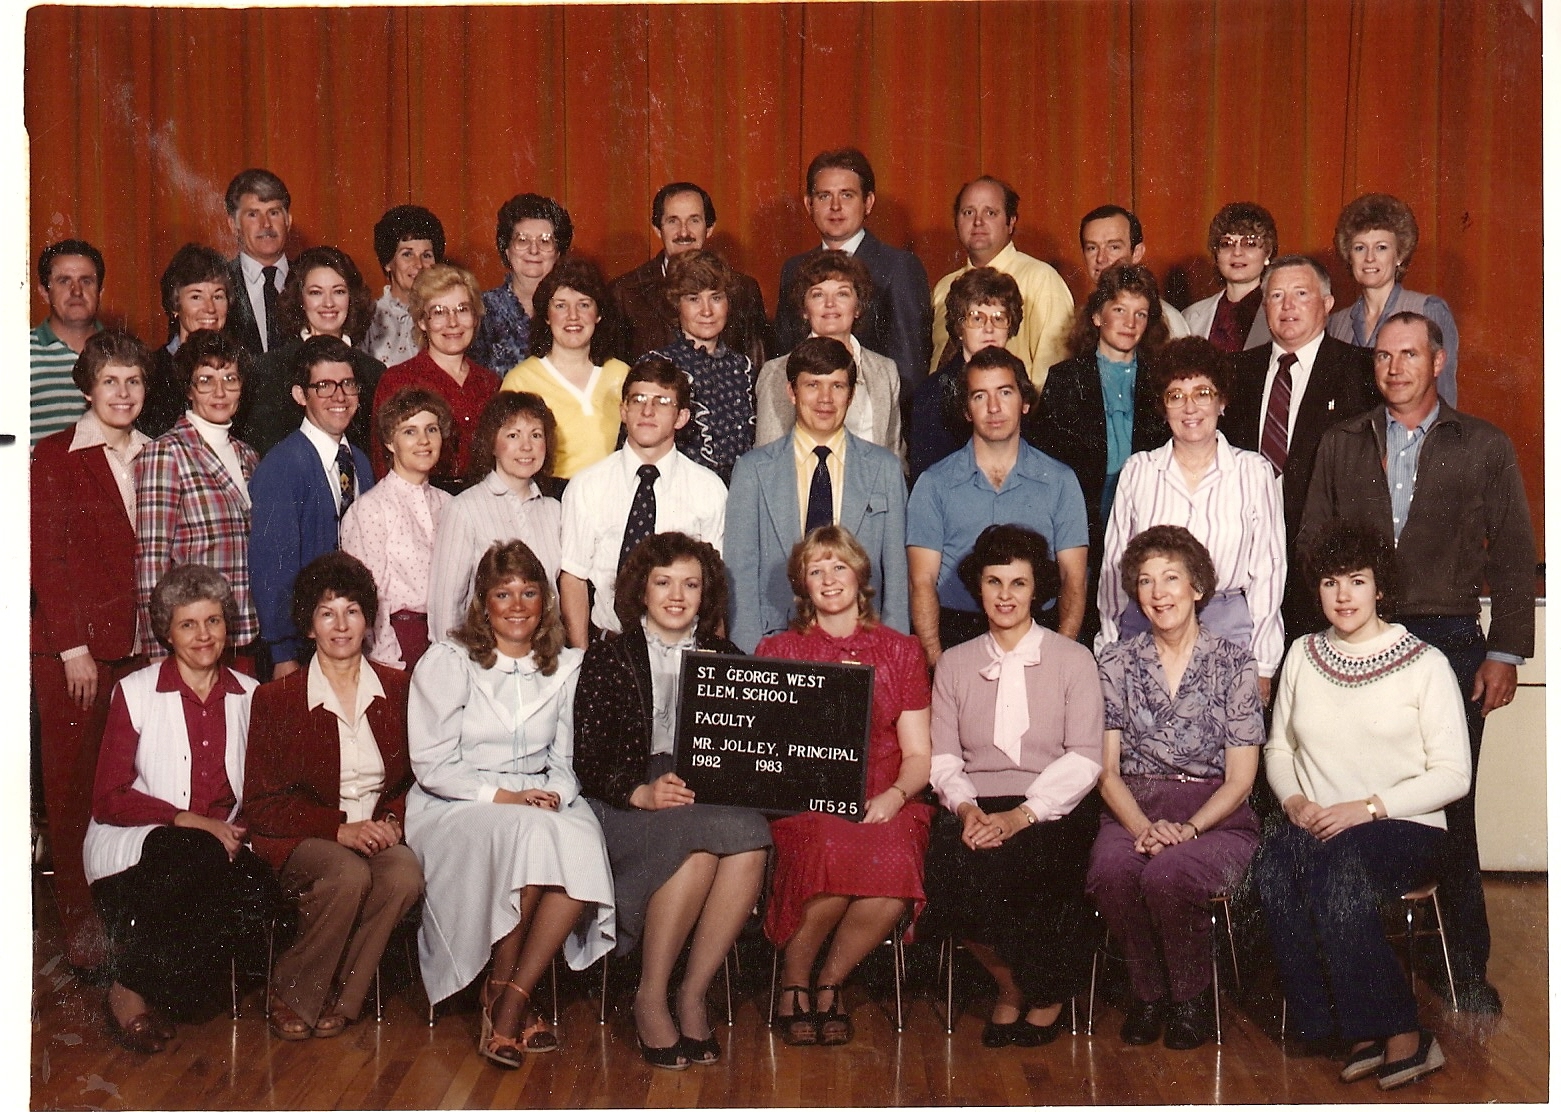 WCHS-00243 West Elementary School 1982-1983 Faculty